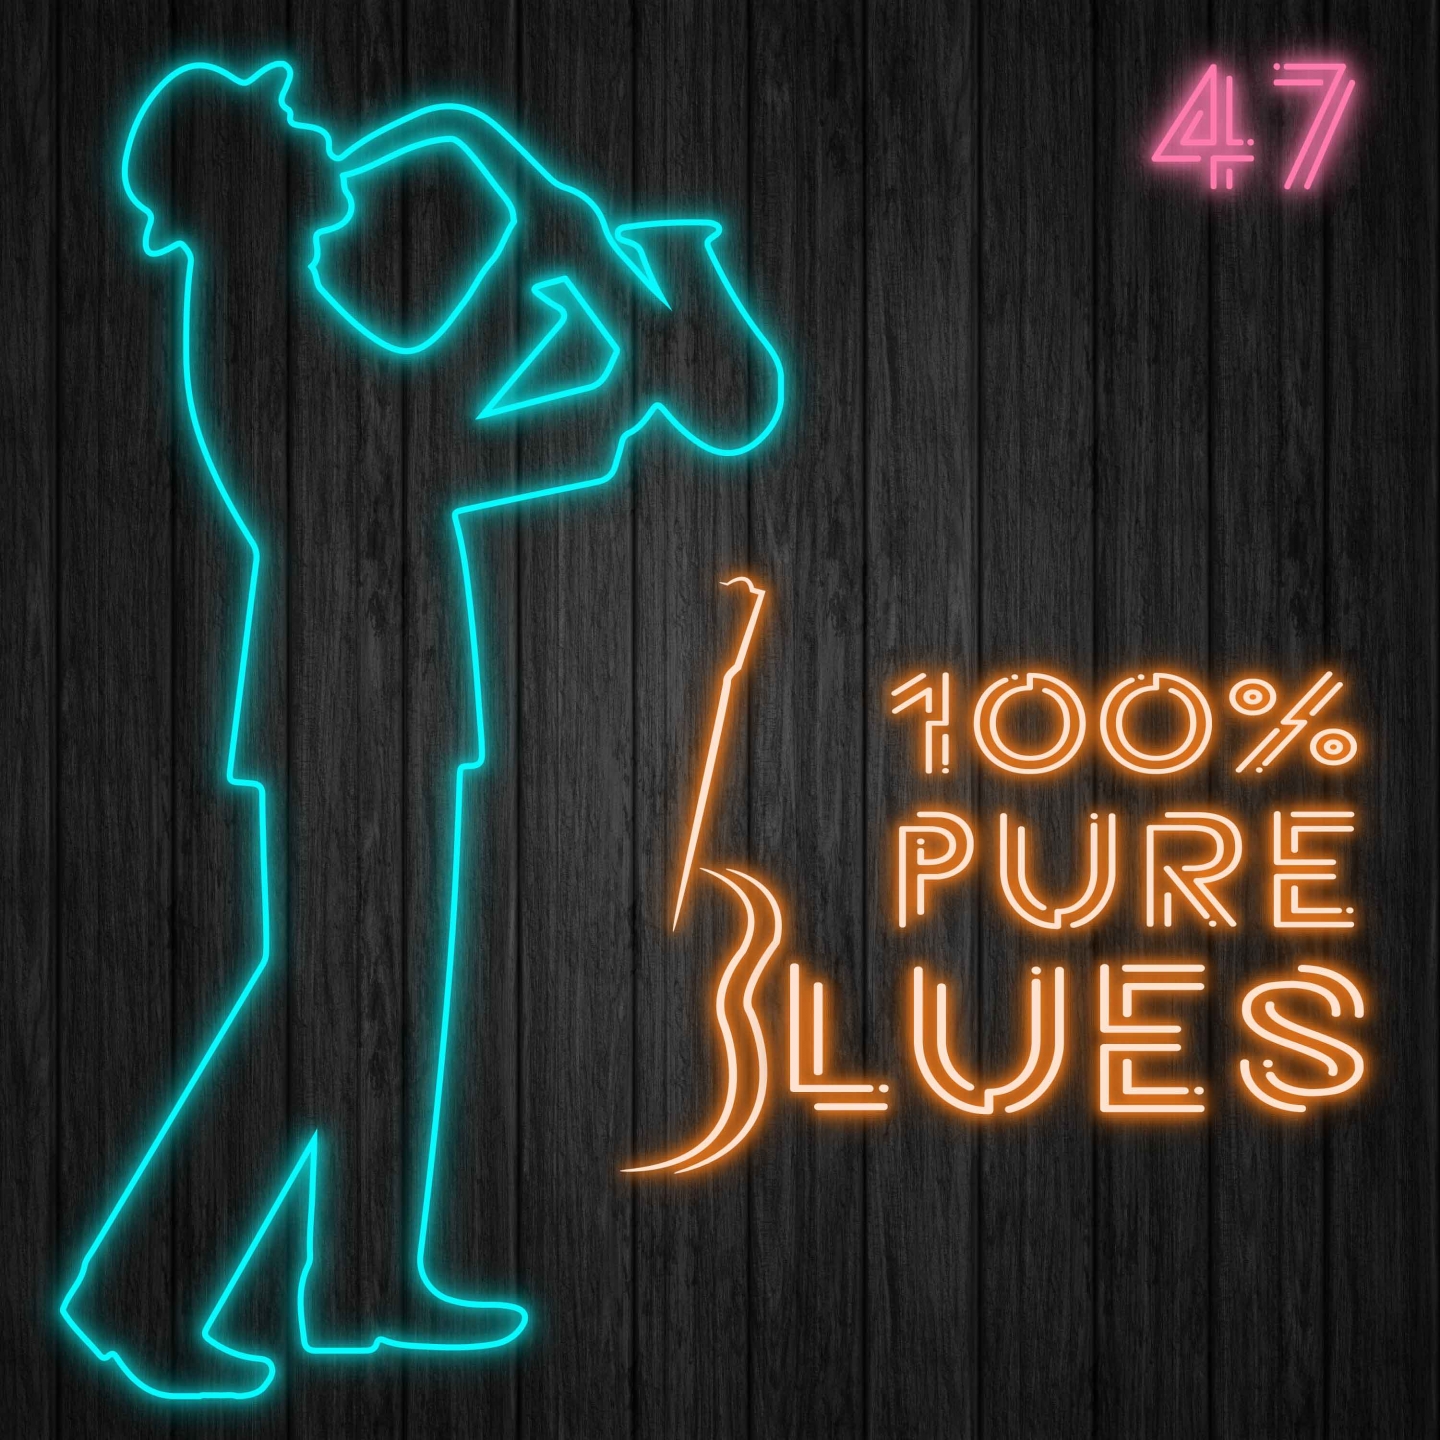 100% Pure Blues / 47